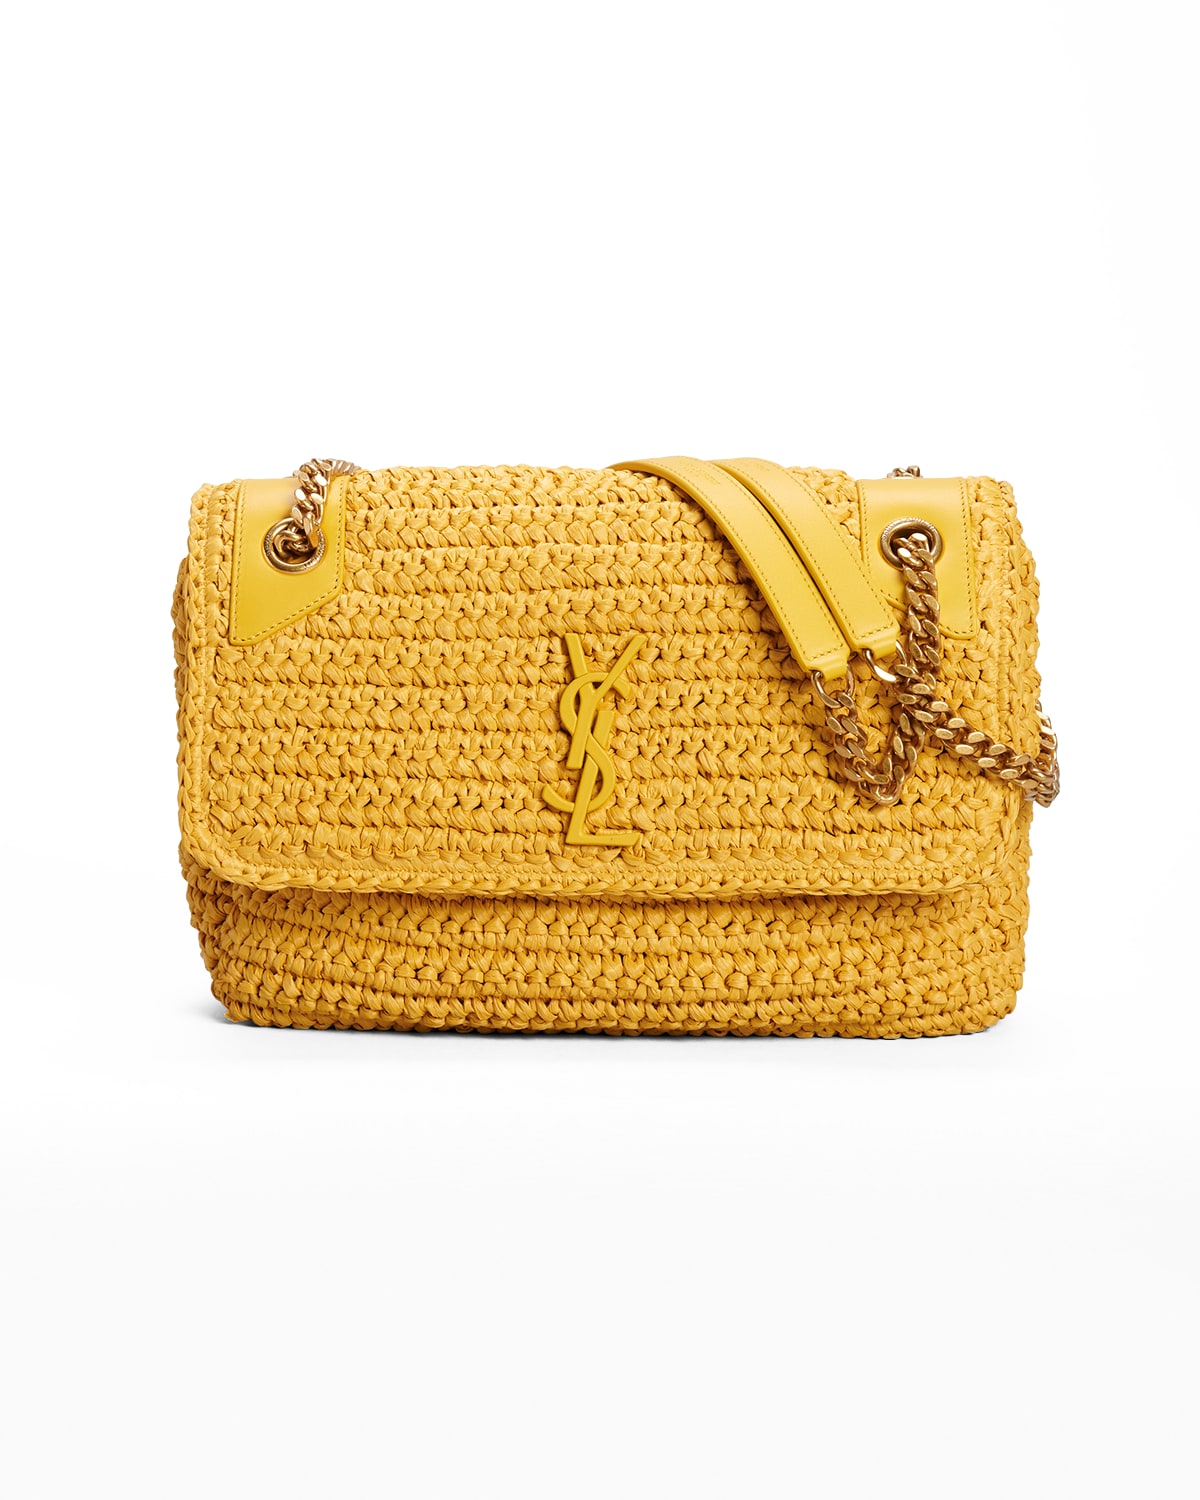 Saint Laurent Niki Ysl Monogram Medium Crocheted Shoulder Bag